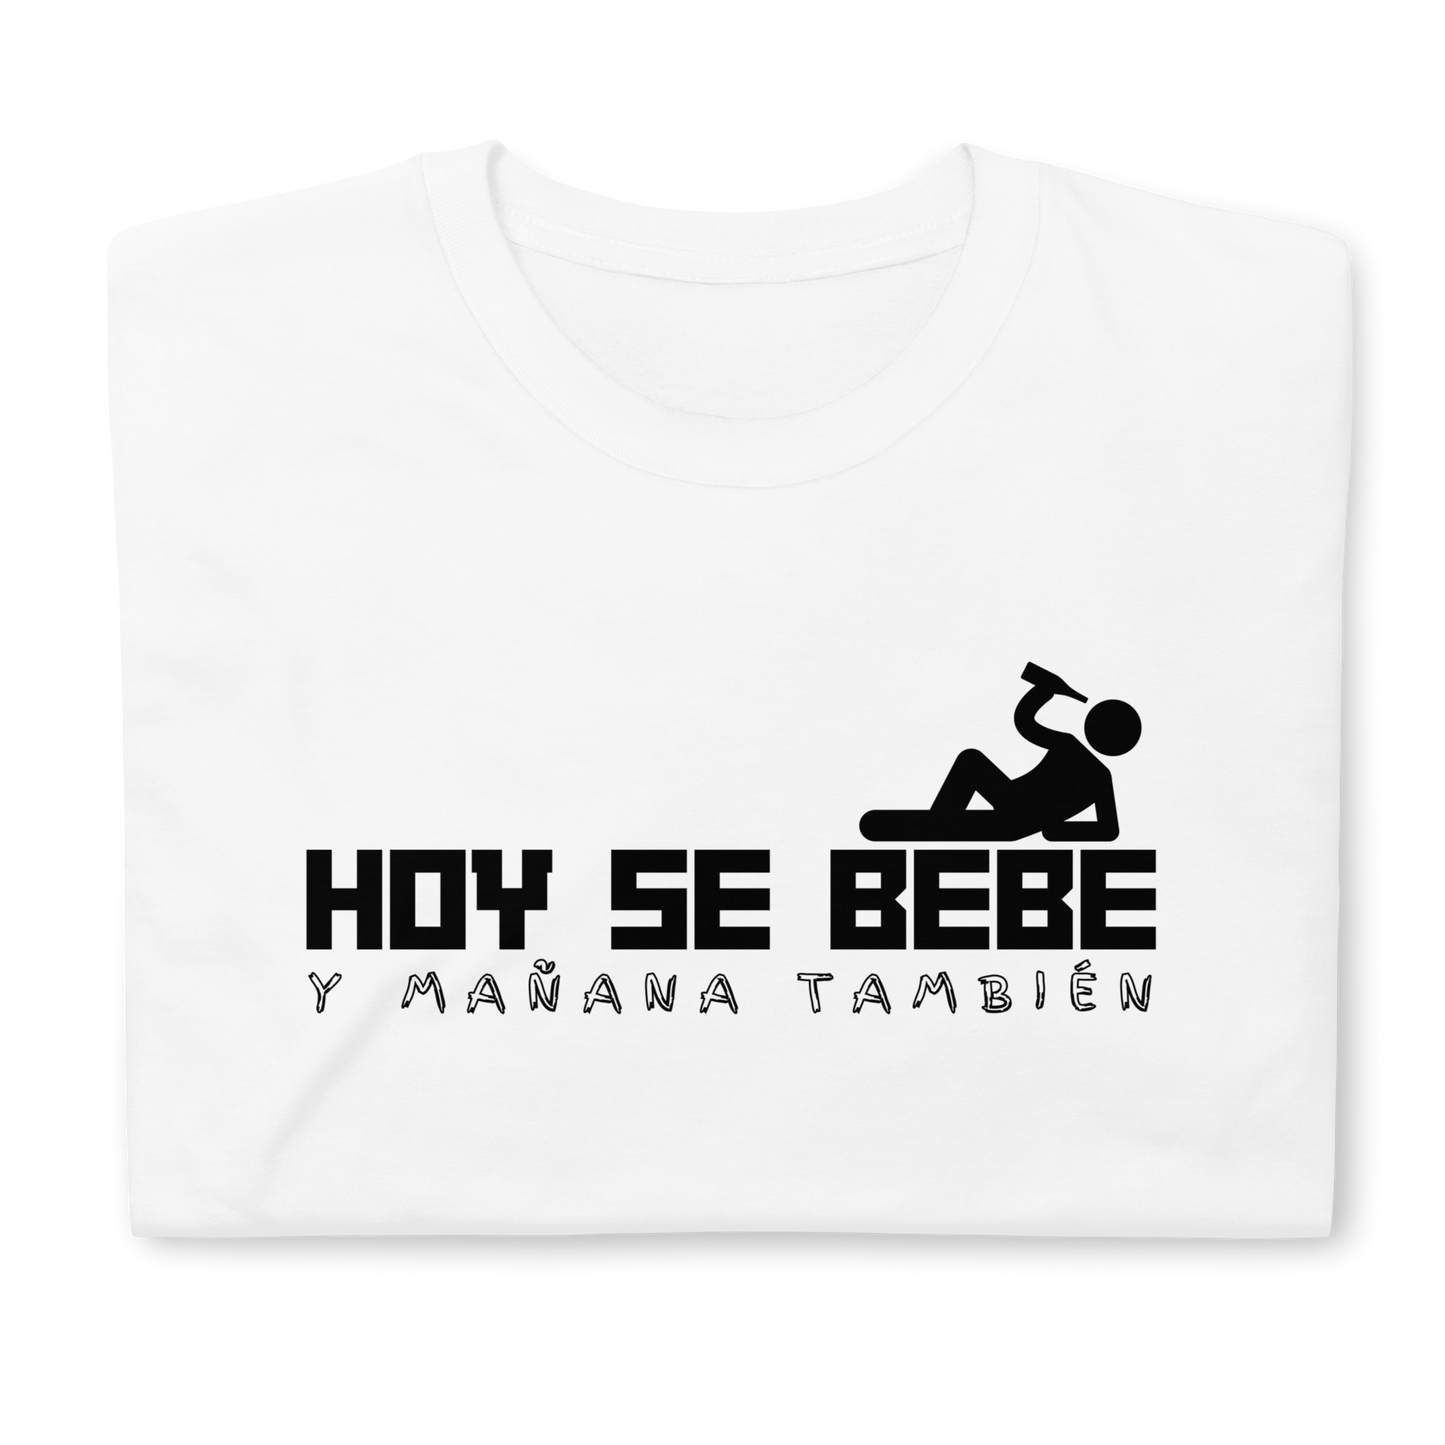 “HOY SE BEBE” Unisex Premium T-Shirt Apliiq